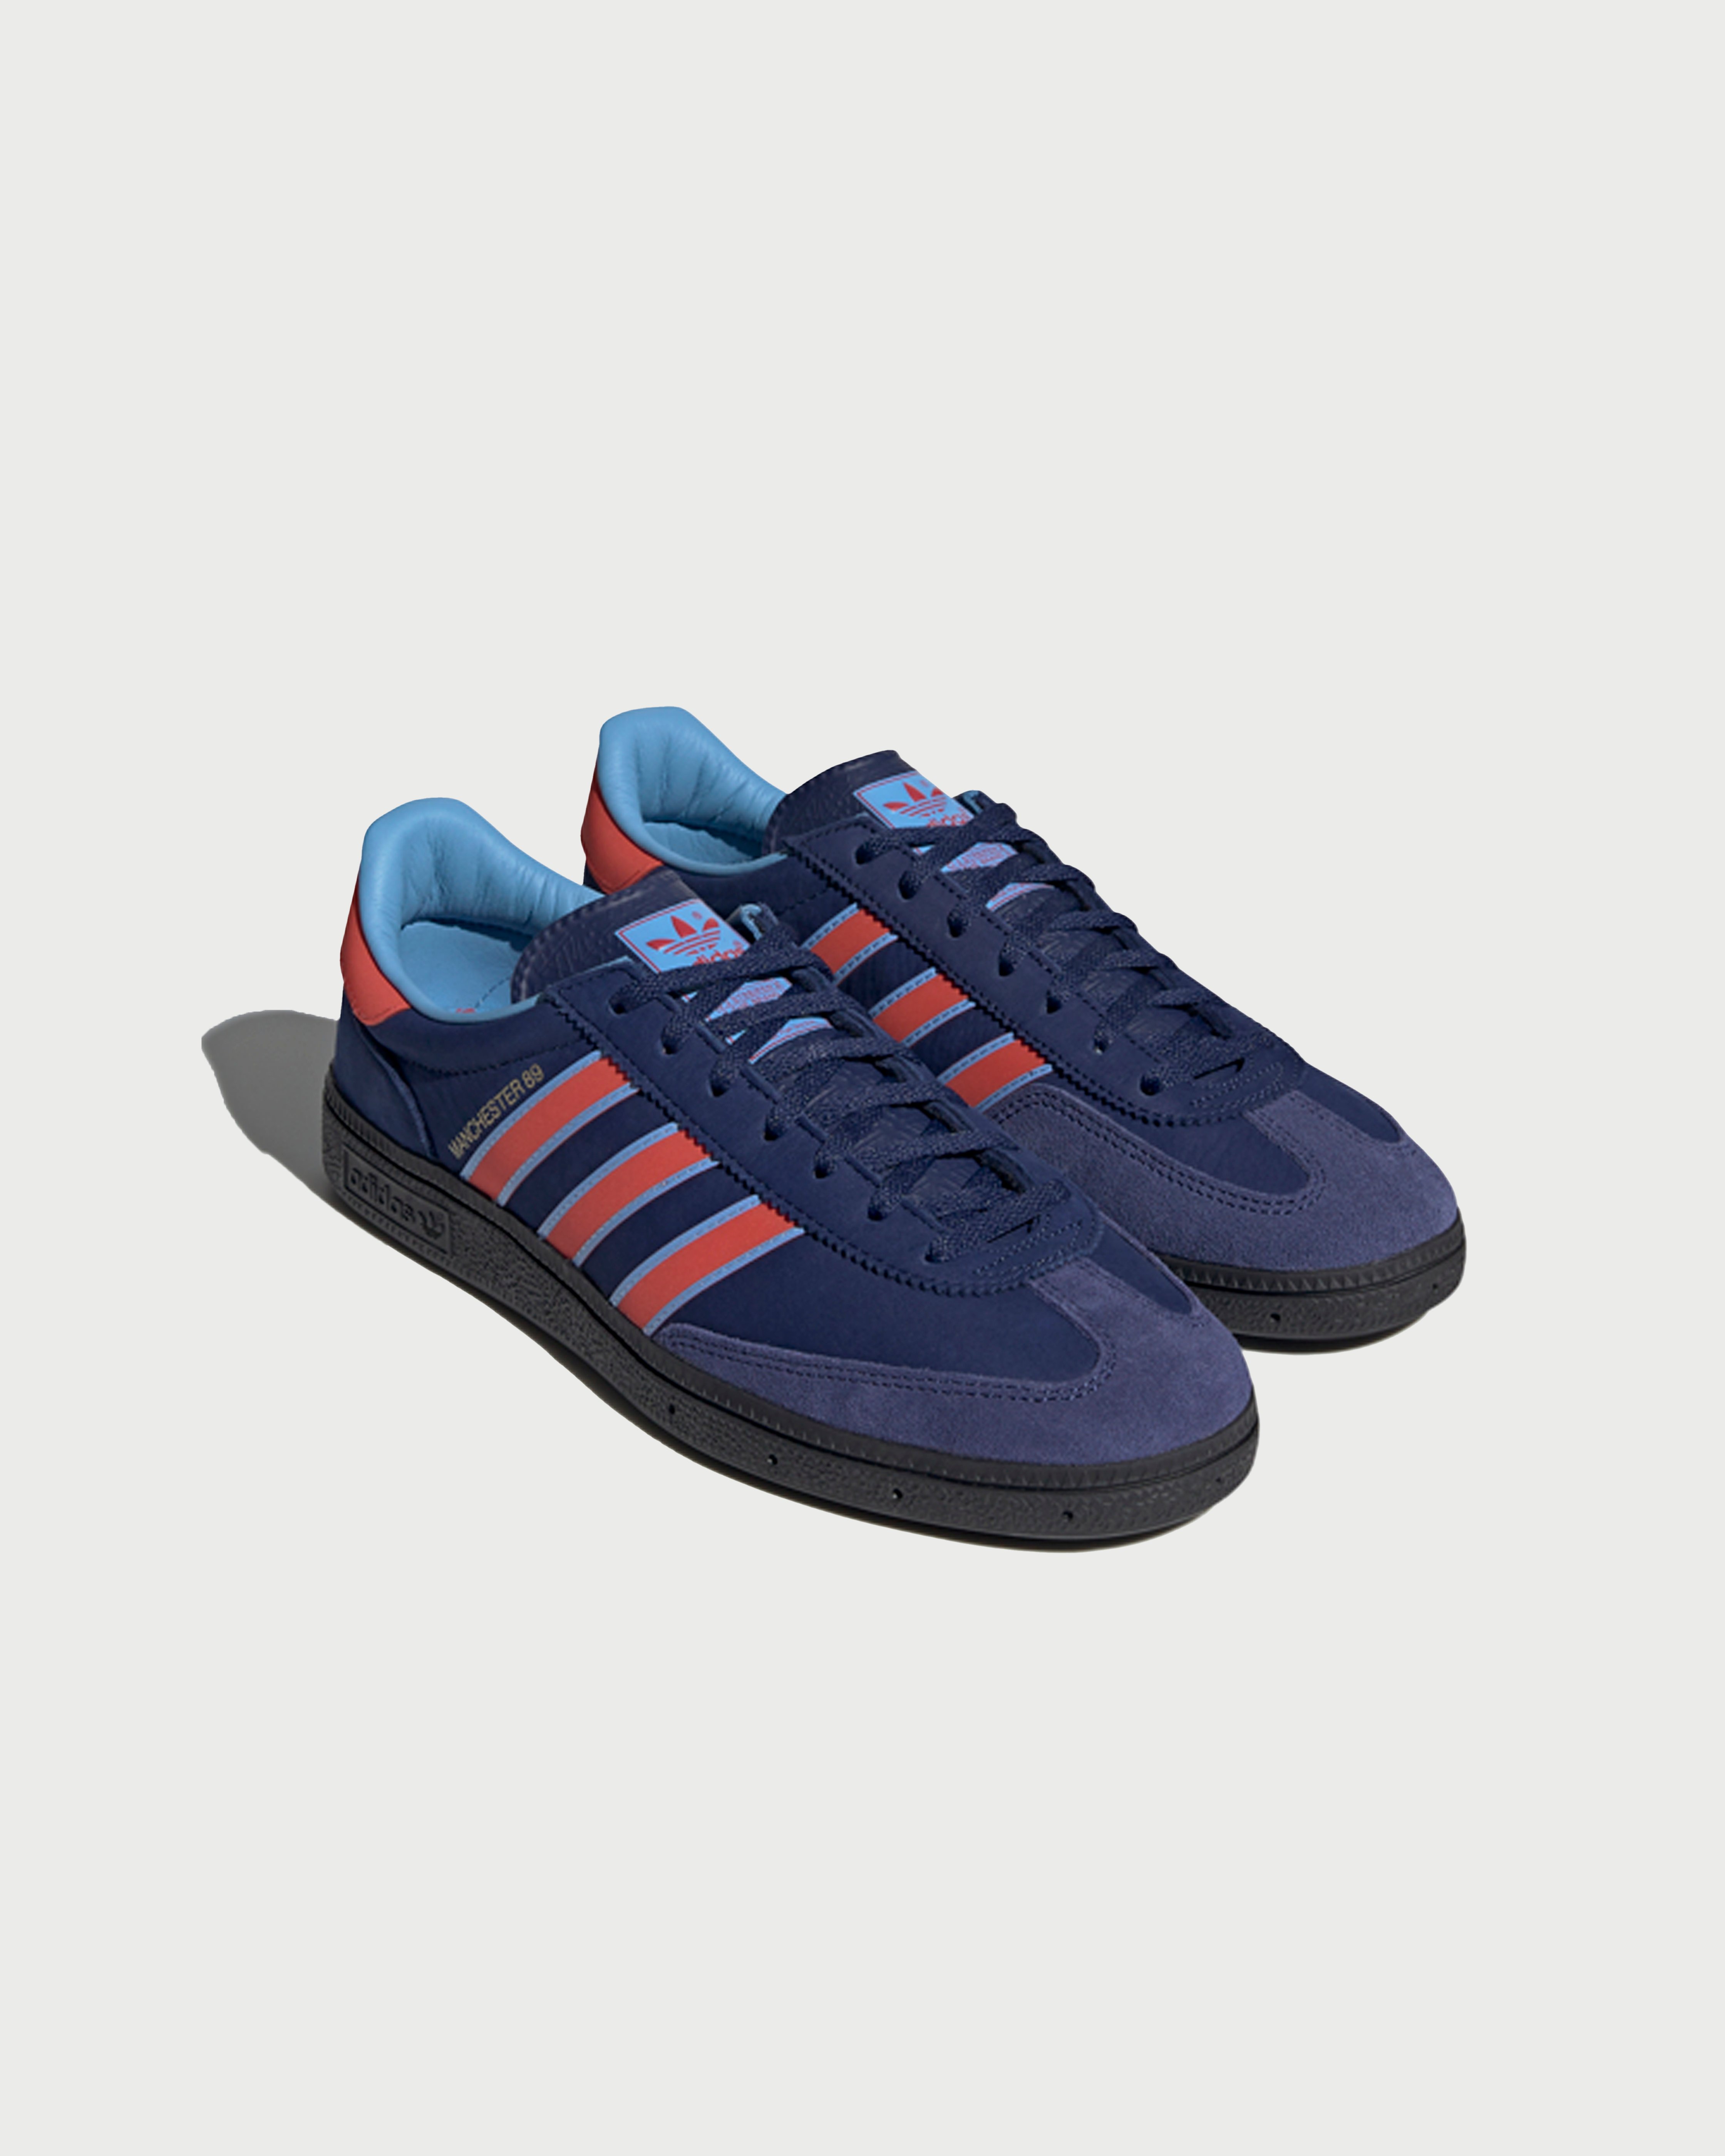 Adidas - Spezial Manchester 89 Trainer Navy - Footwear - Blue - Image 2